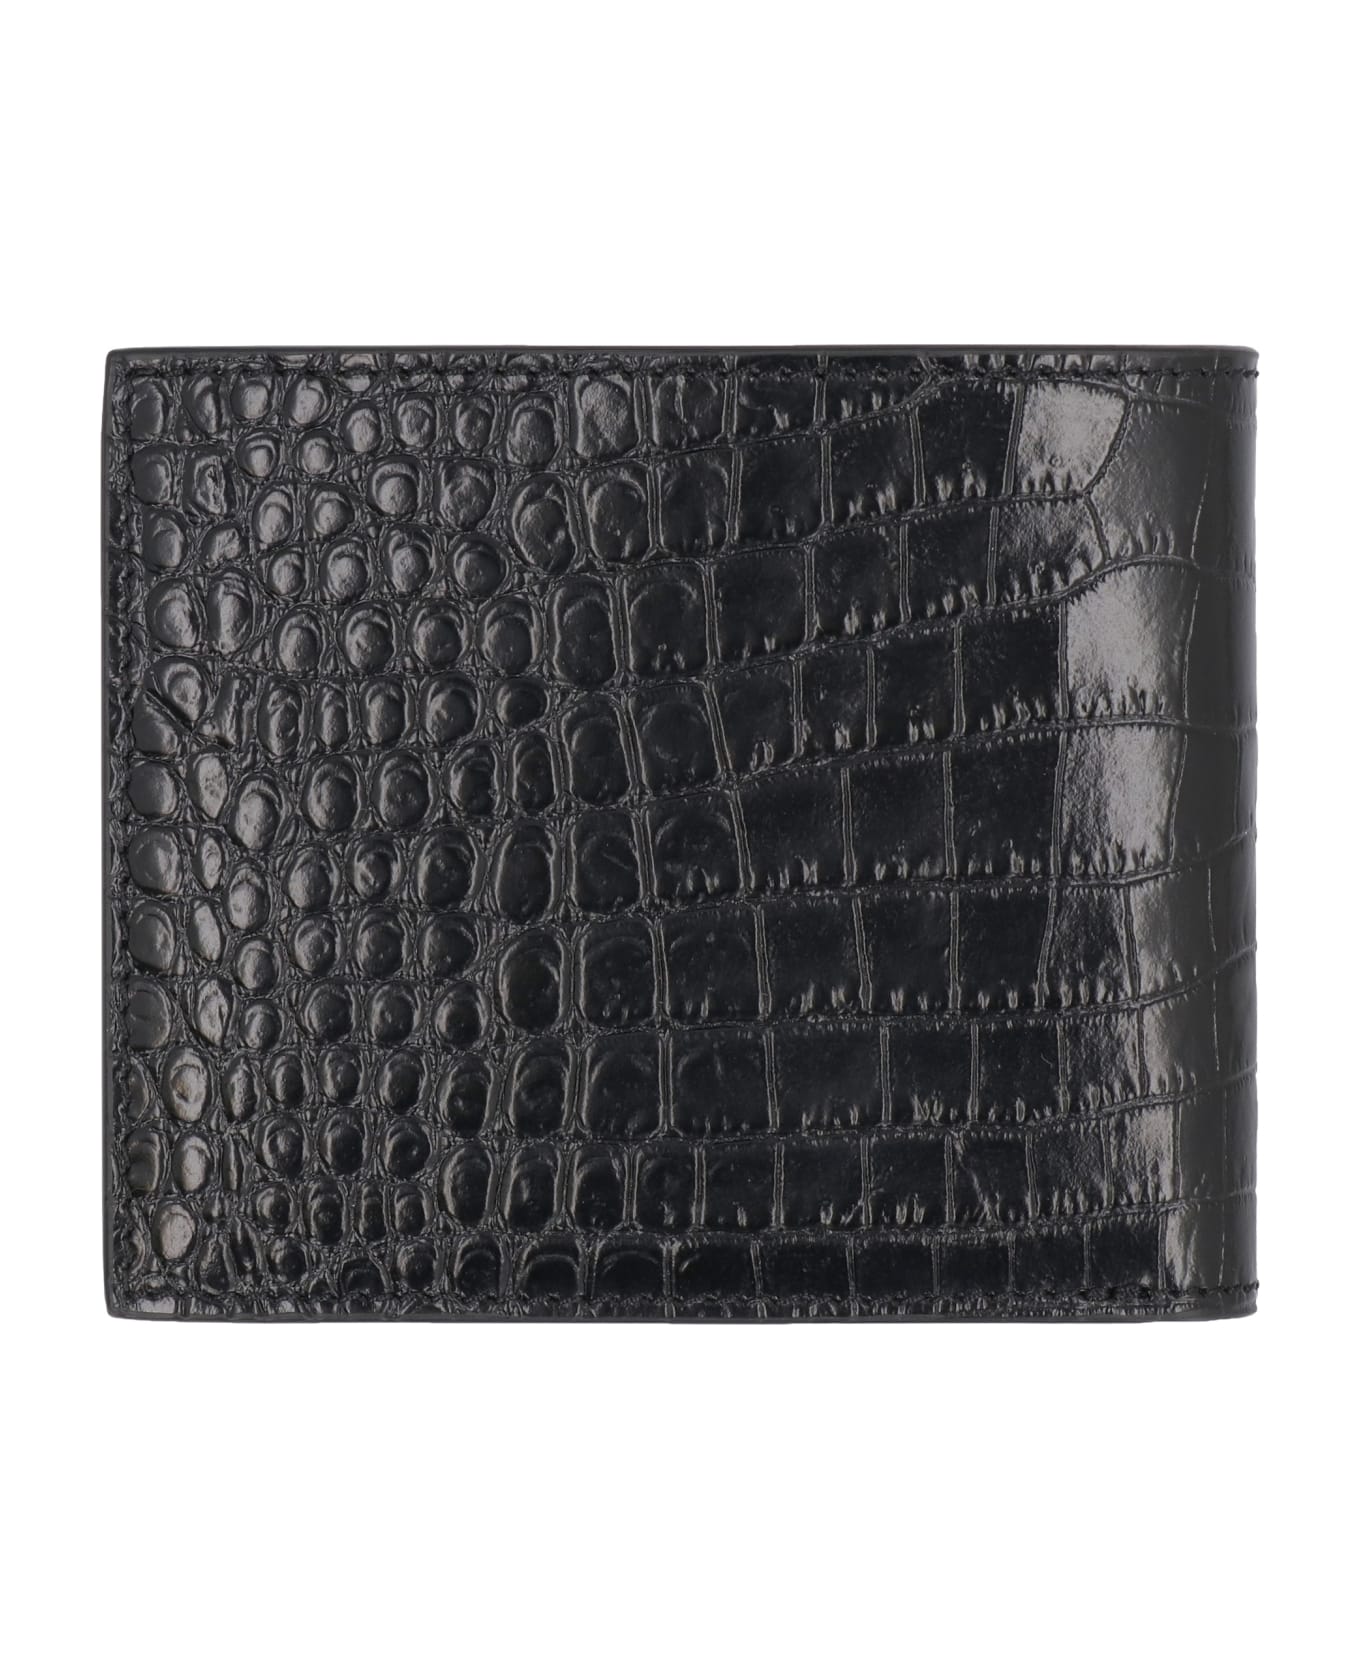 Tom Ford Leather Flap-over Wallet - Black